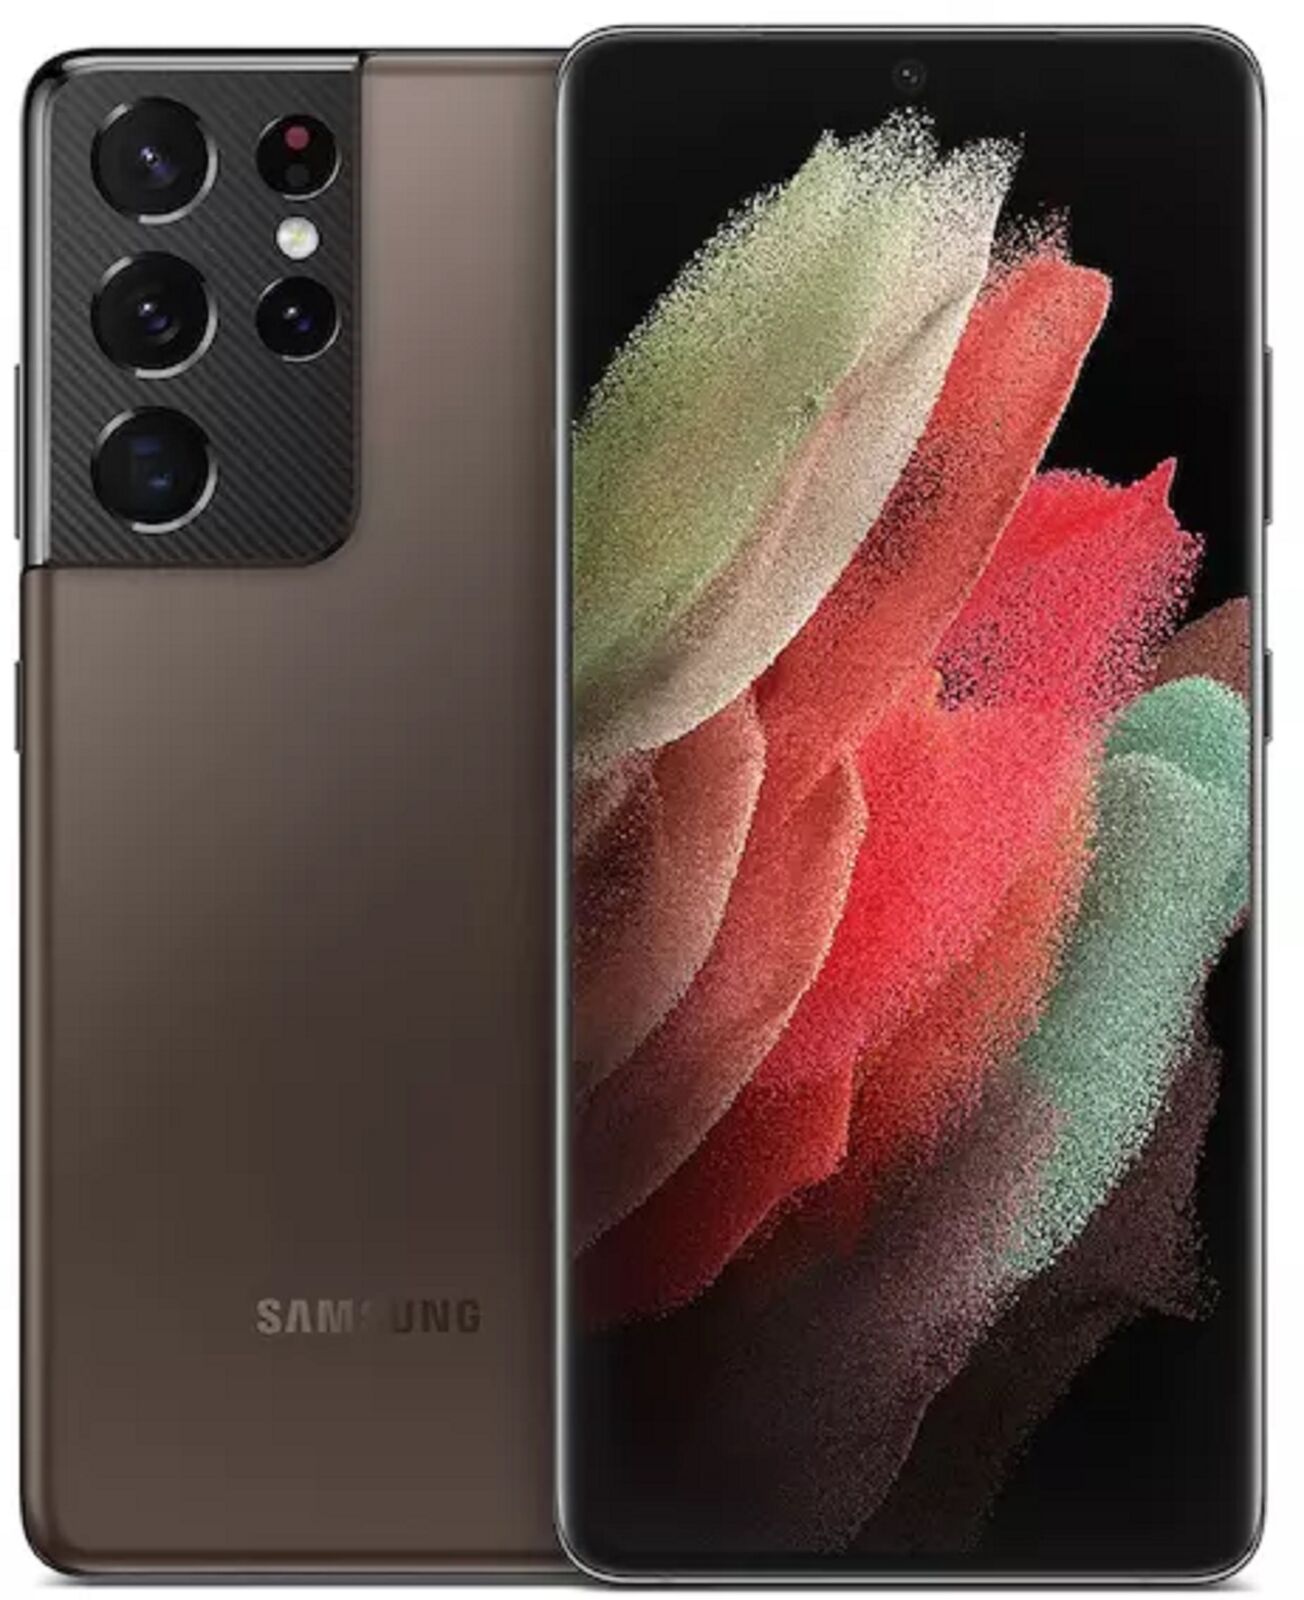 Open Box Samsung Galaxy S21 Ultra 5G SM-G998U1 128GB Bronze (US Model) - Factory Unlocked Cell Phone - image 2 of 4